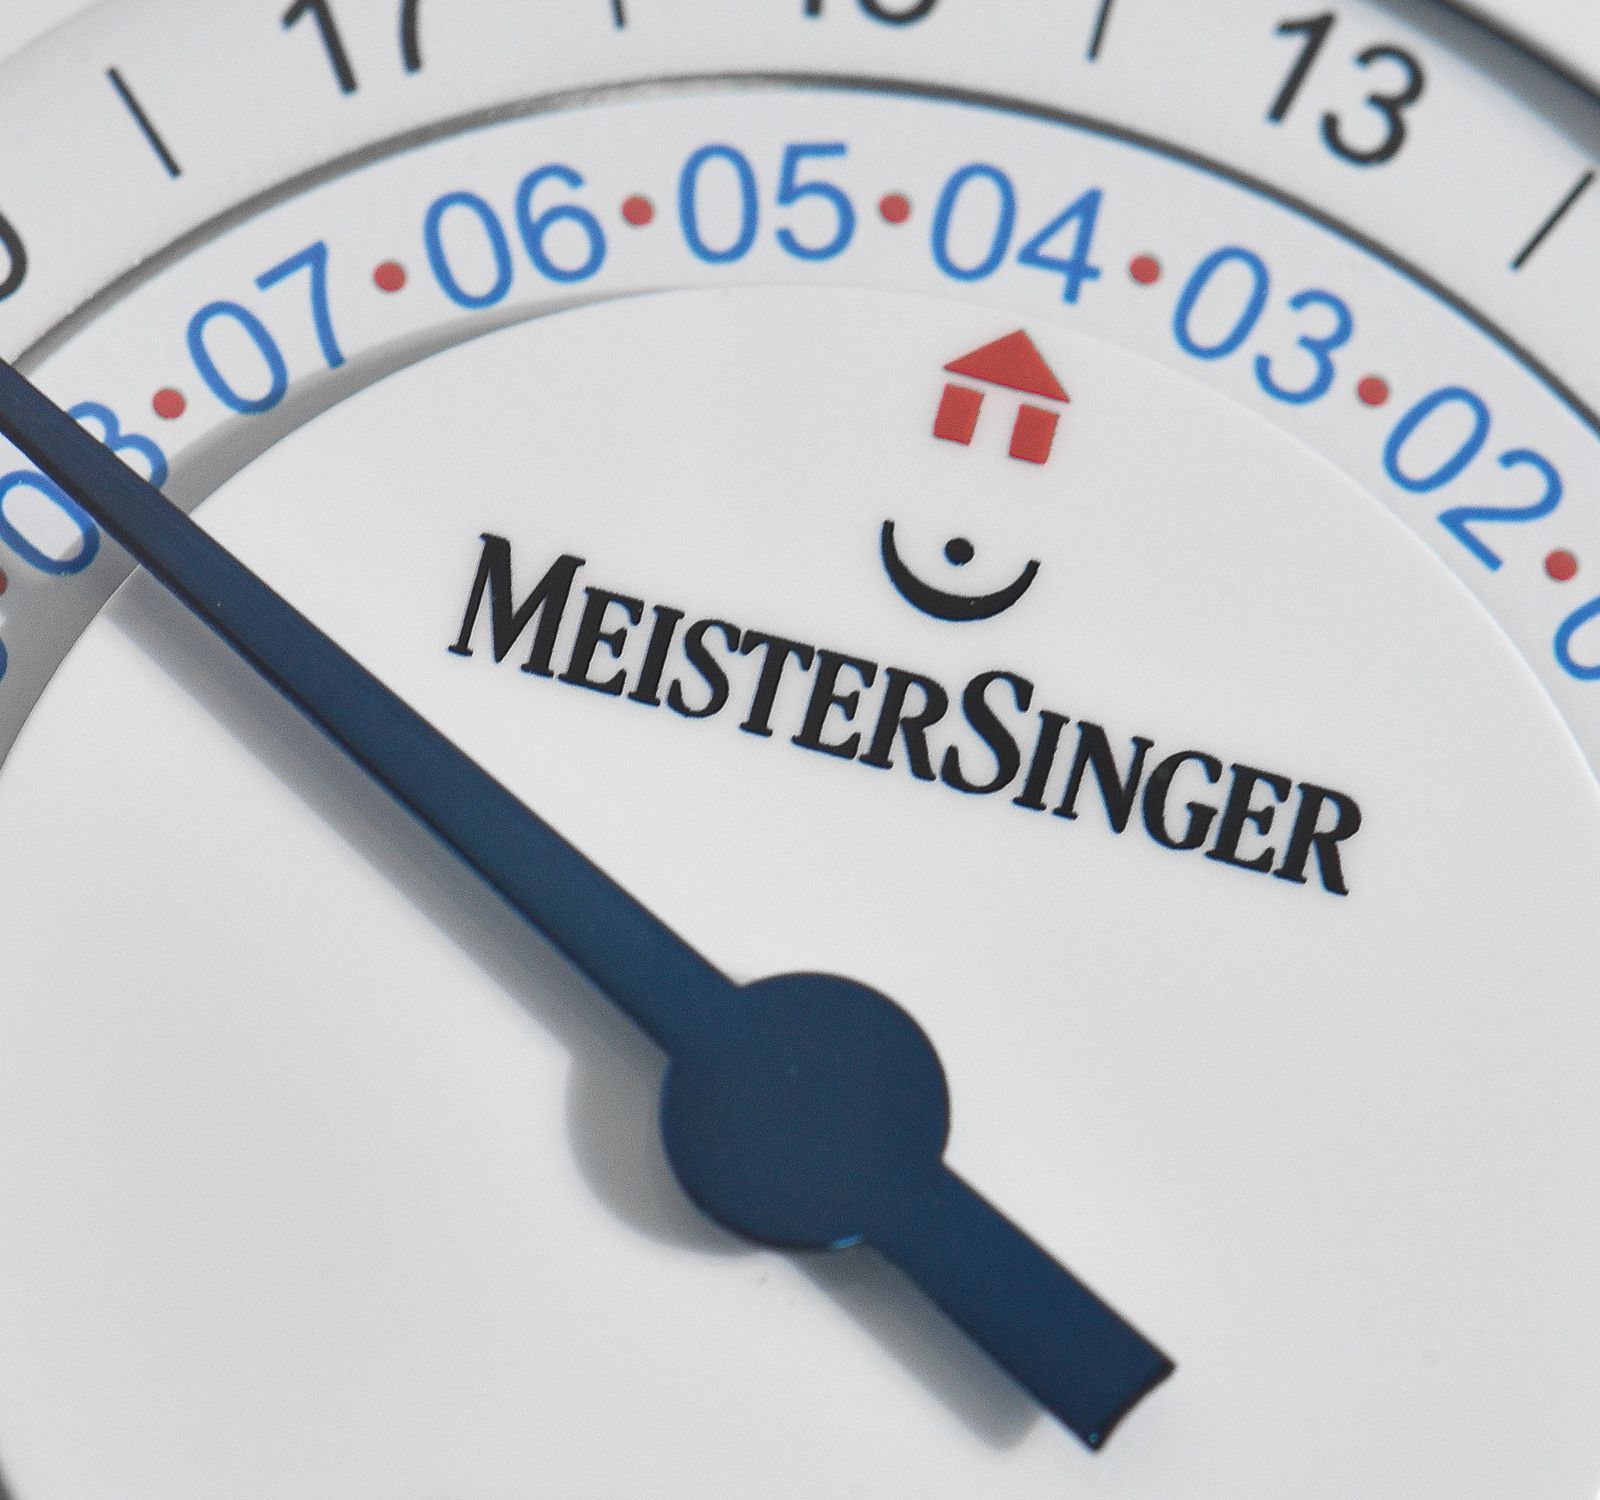 MeisterSinger Watches